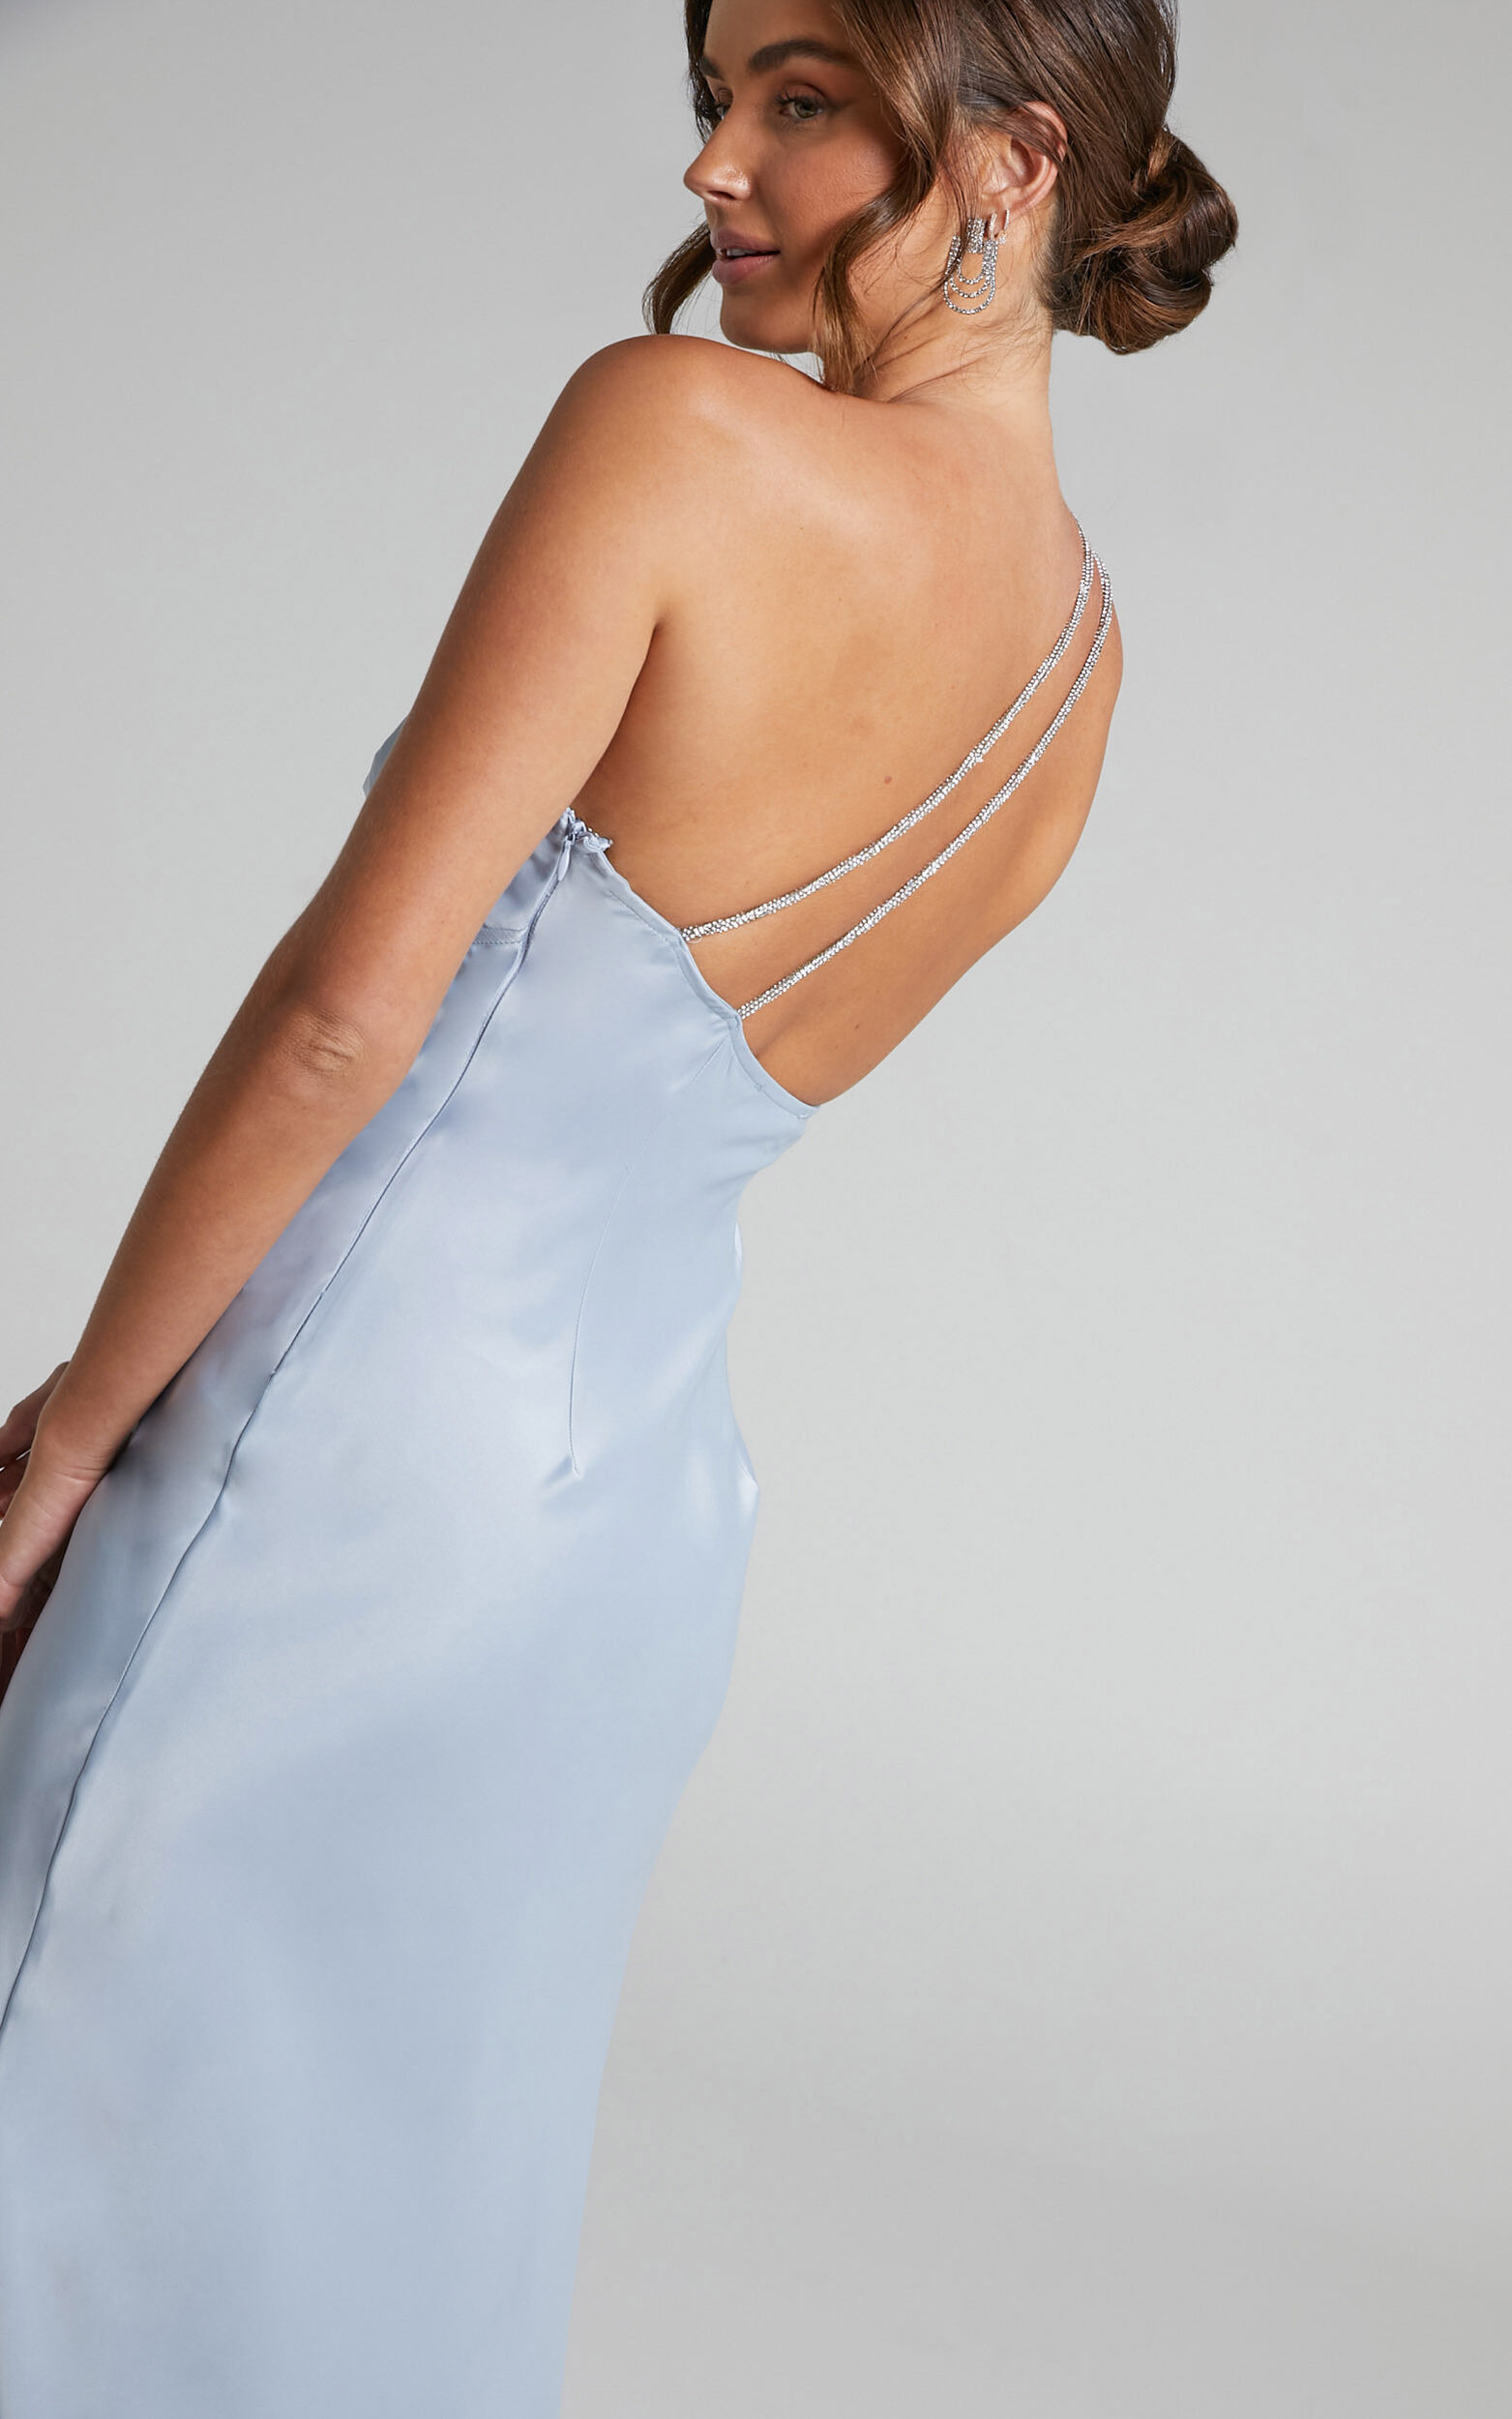 Elzales Midaxi Dress - One Shoulder Beaded Strap Satin Dress in Pale Blue - 04, BLU2